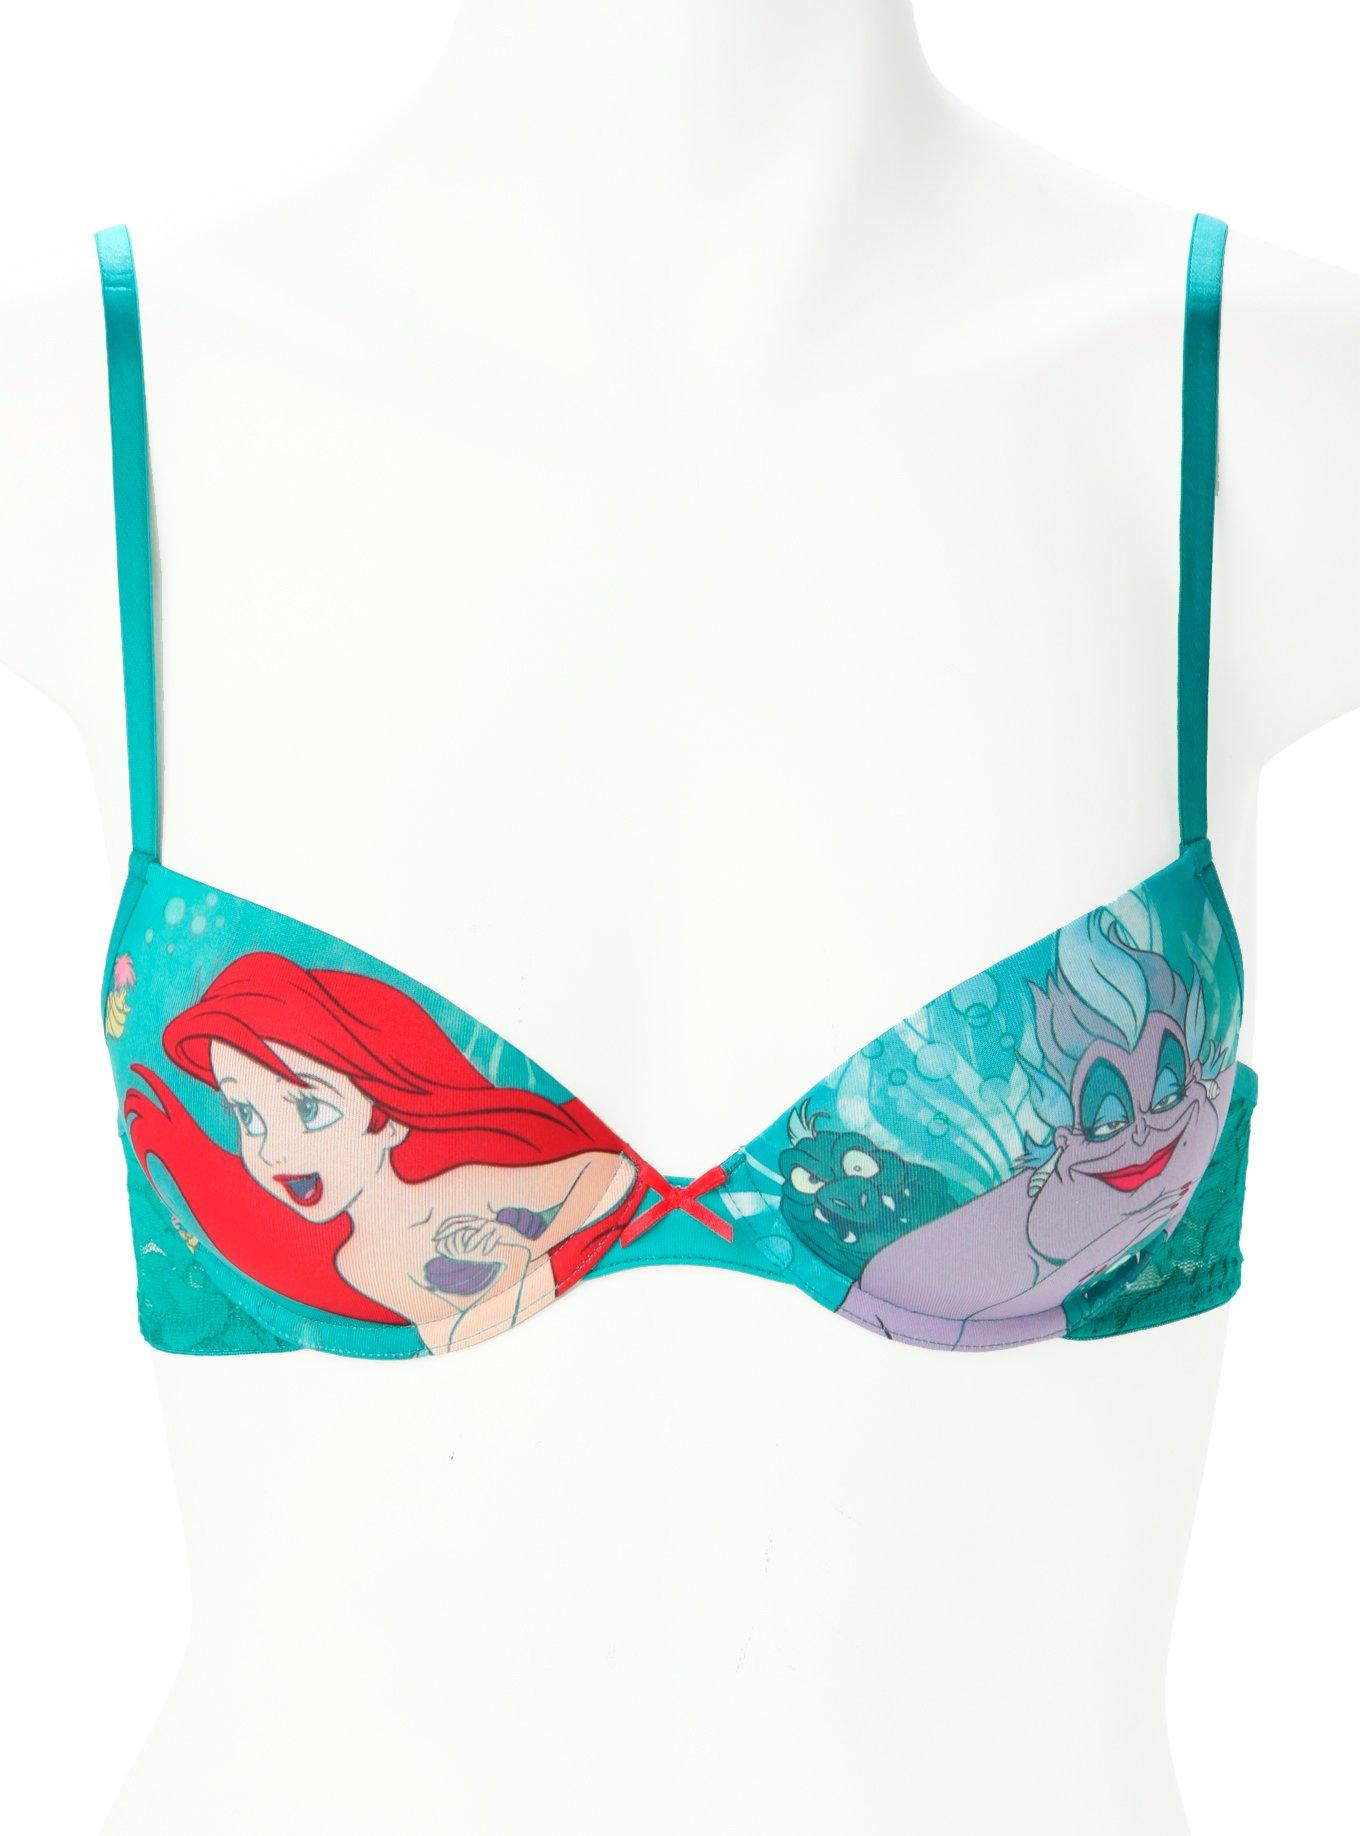 DisneyLifestylers on X: New Ariel underwear set from @topshop #disney # ariel #littlemermaid #thelittlemermaid #top…    / X